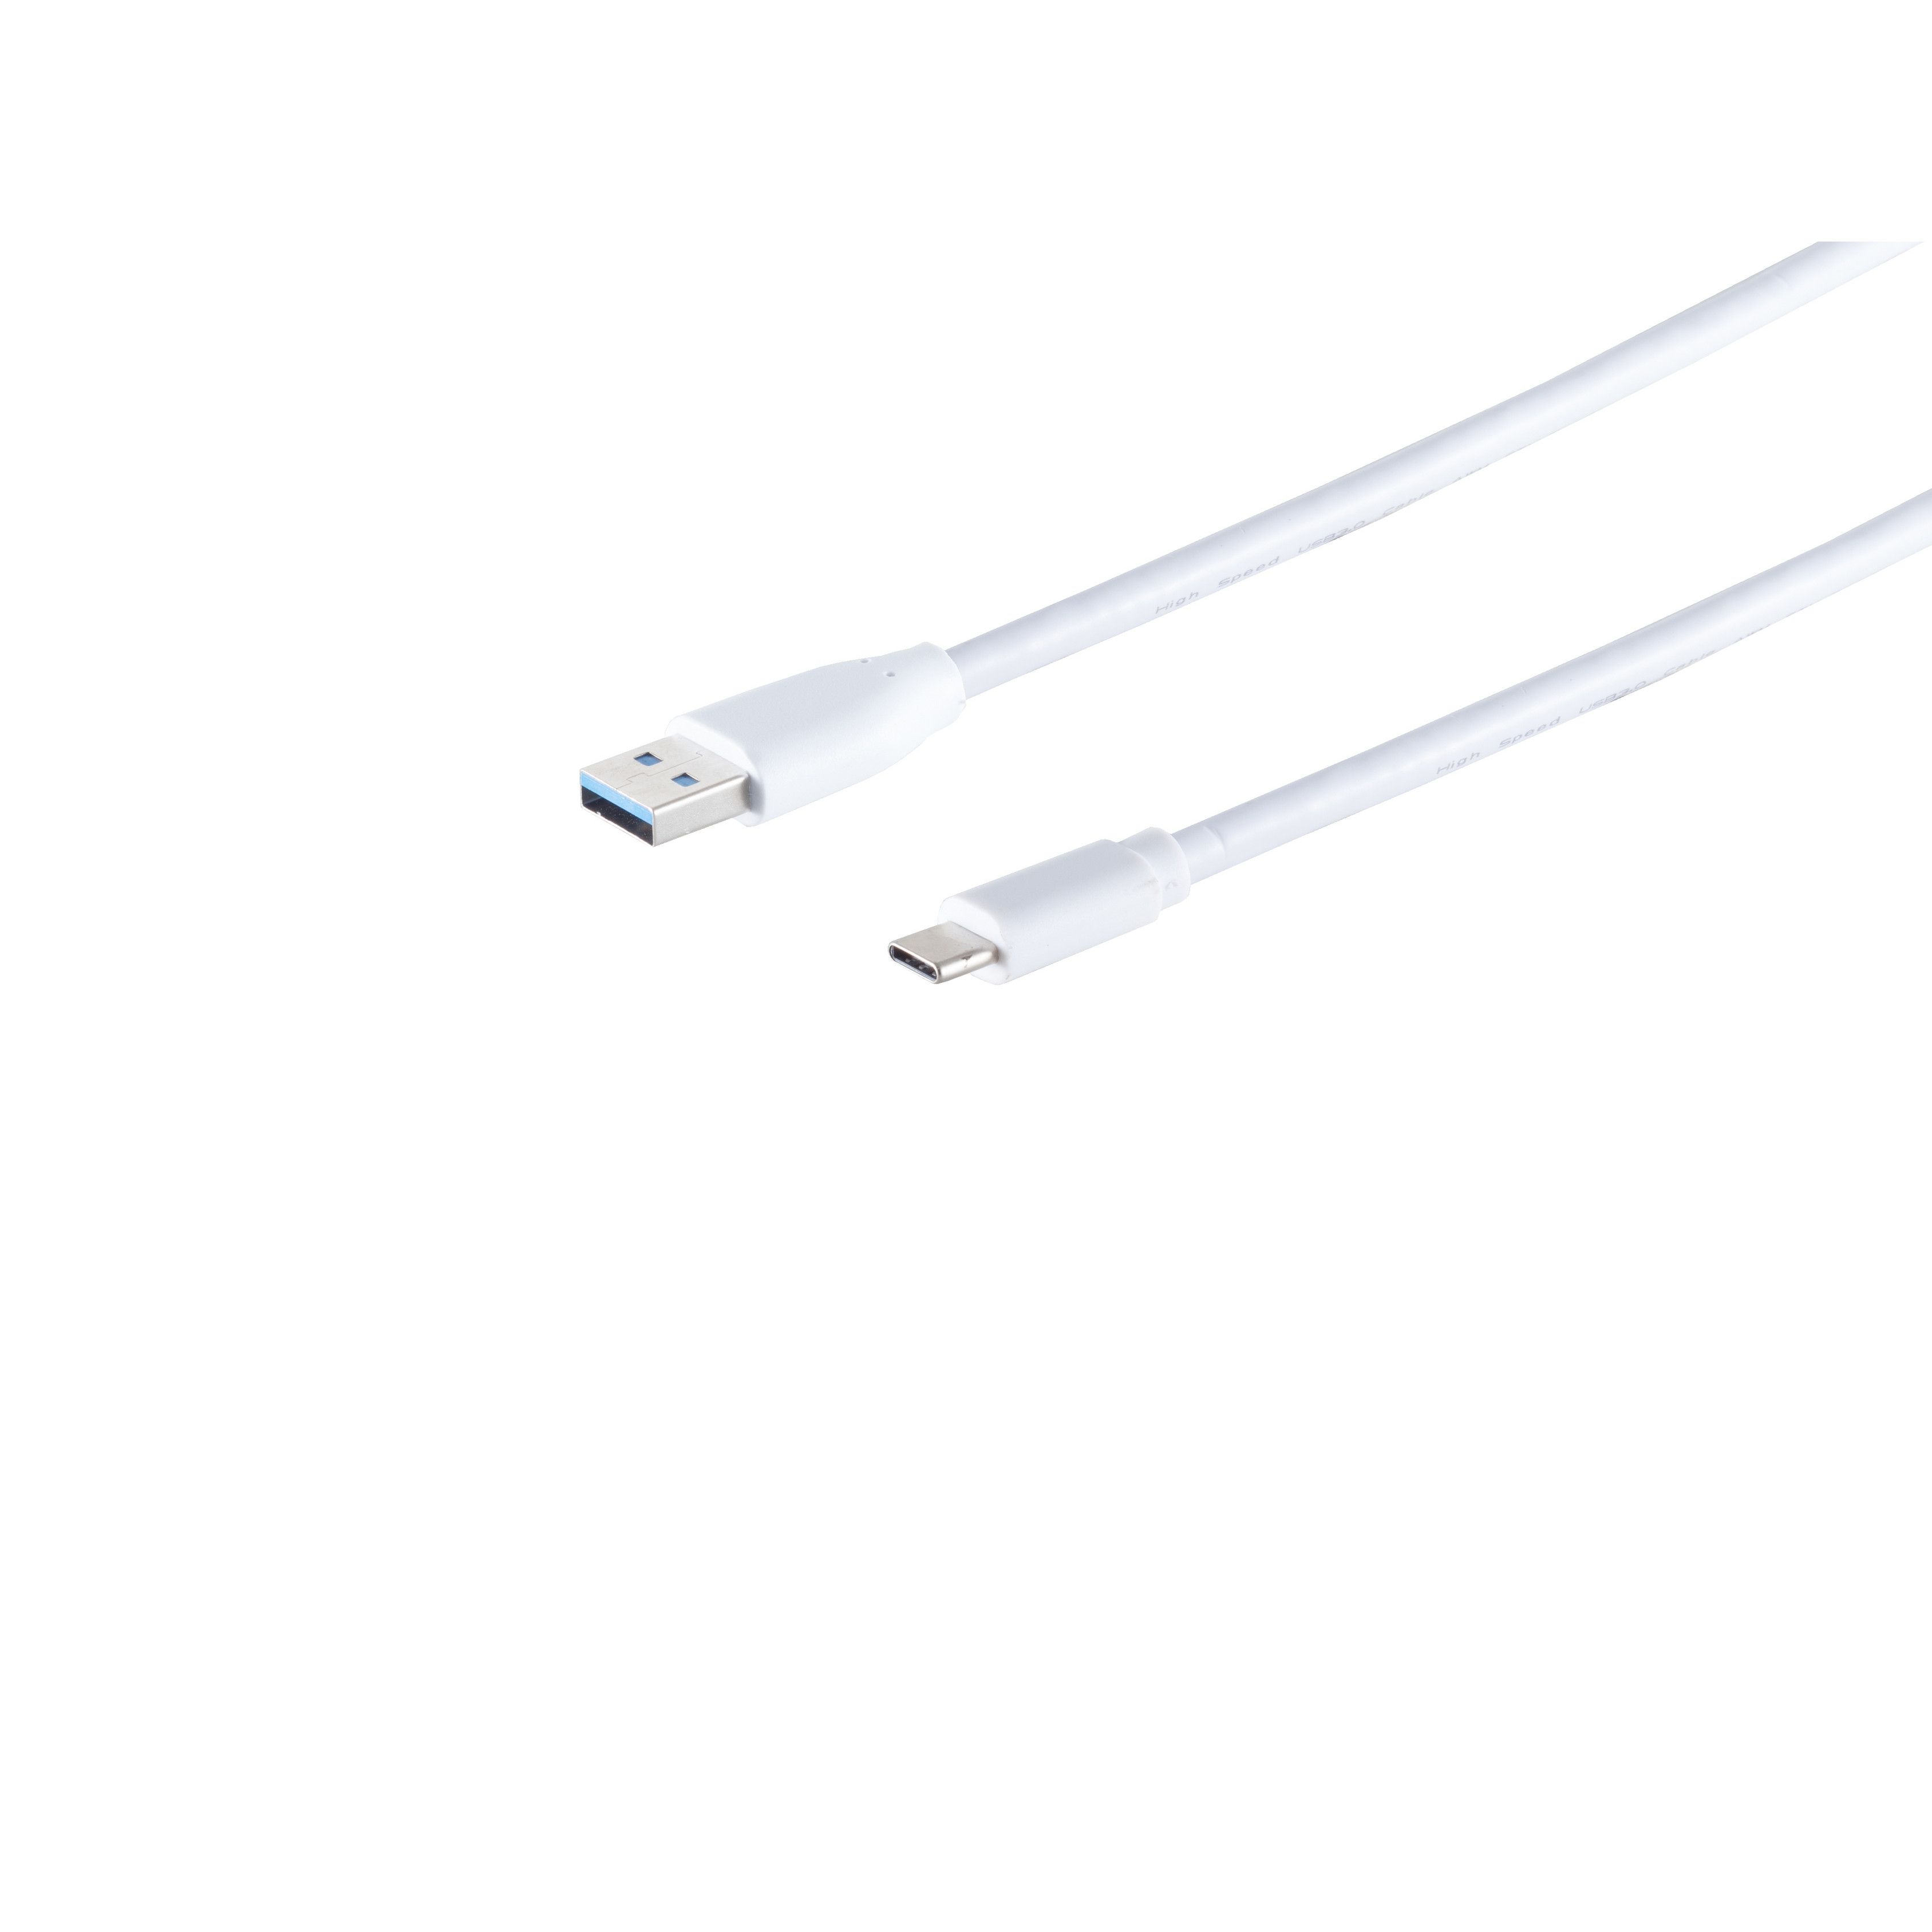 S/CONN MAXIMUM Kabel weiß 3.0 Kabel -USB A Stecker CONNECTIVITY C USB 3m 3.1 USB Stecker